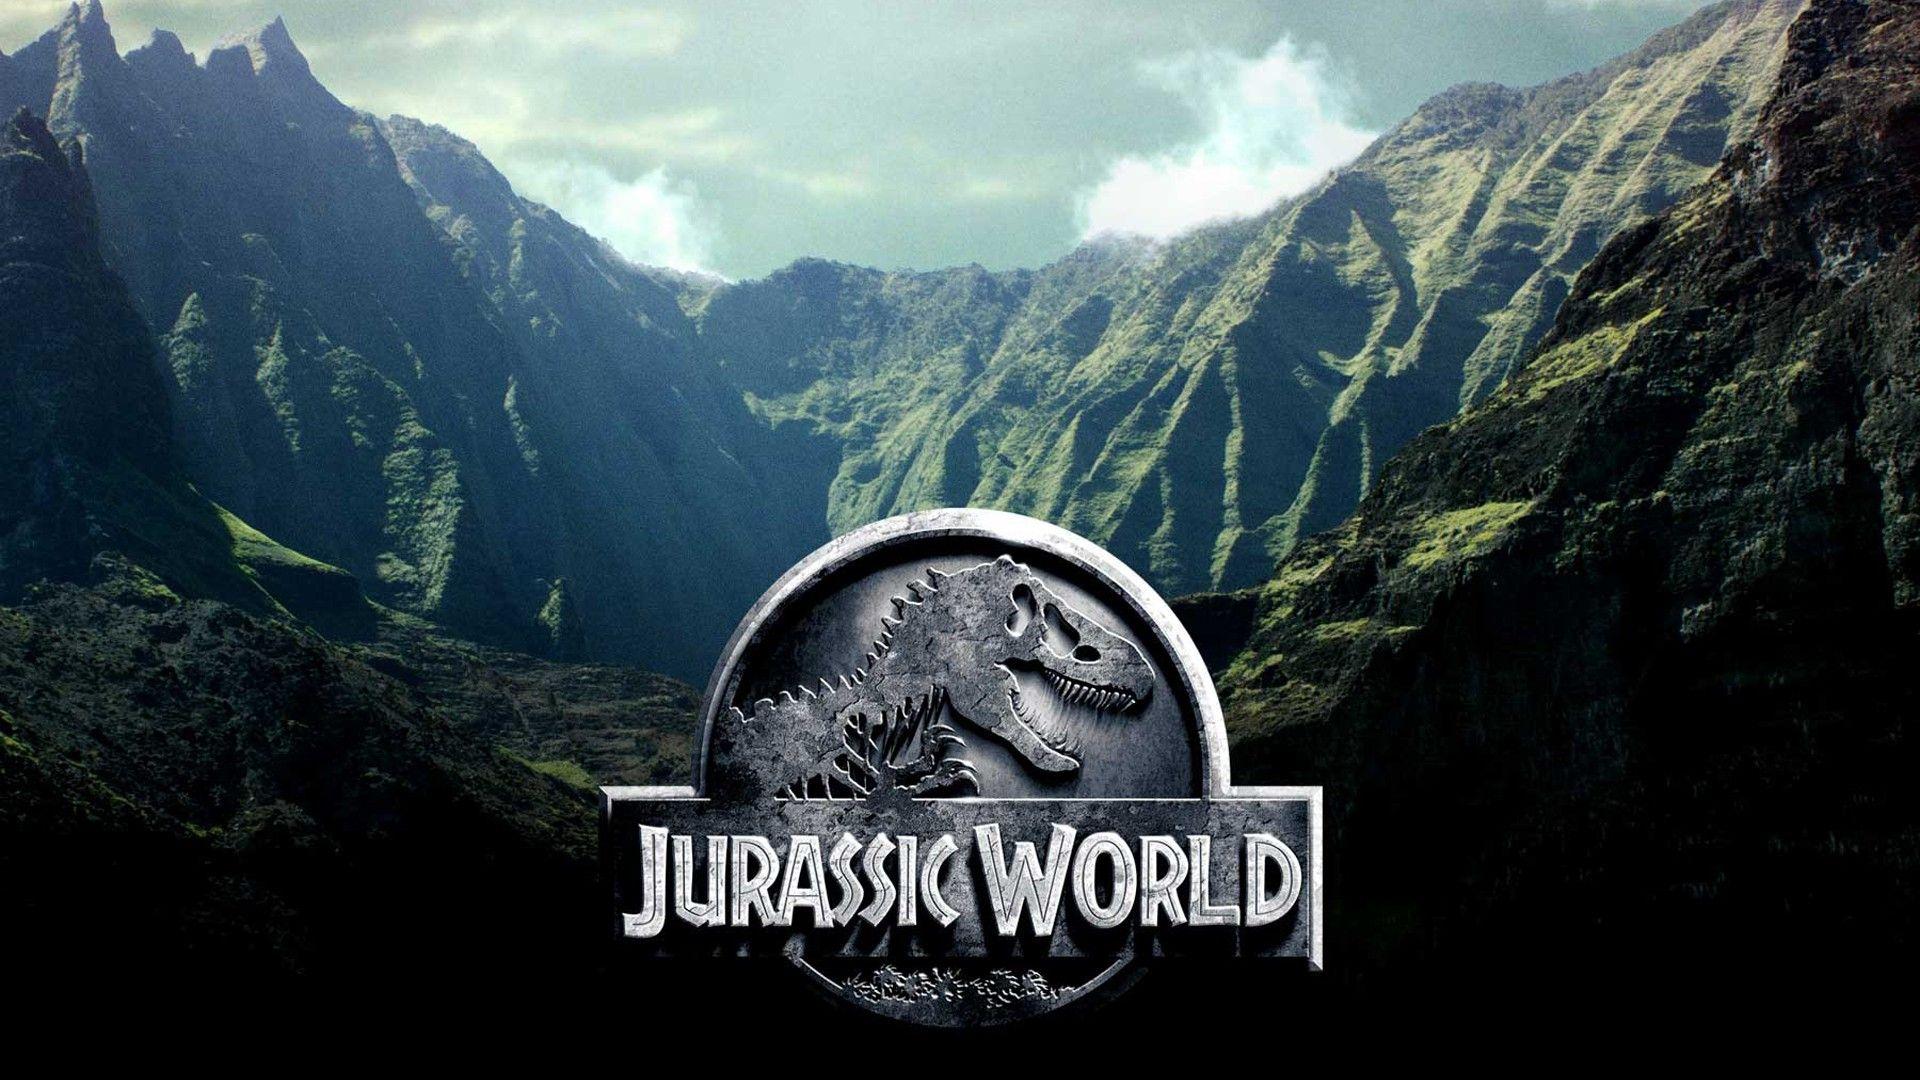 Jurassic World free downloads